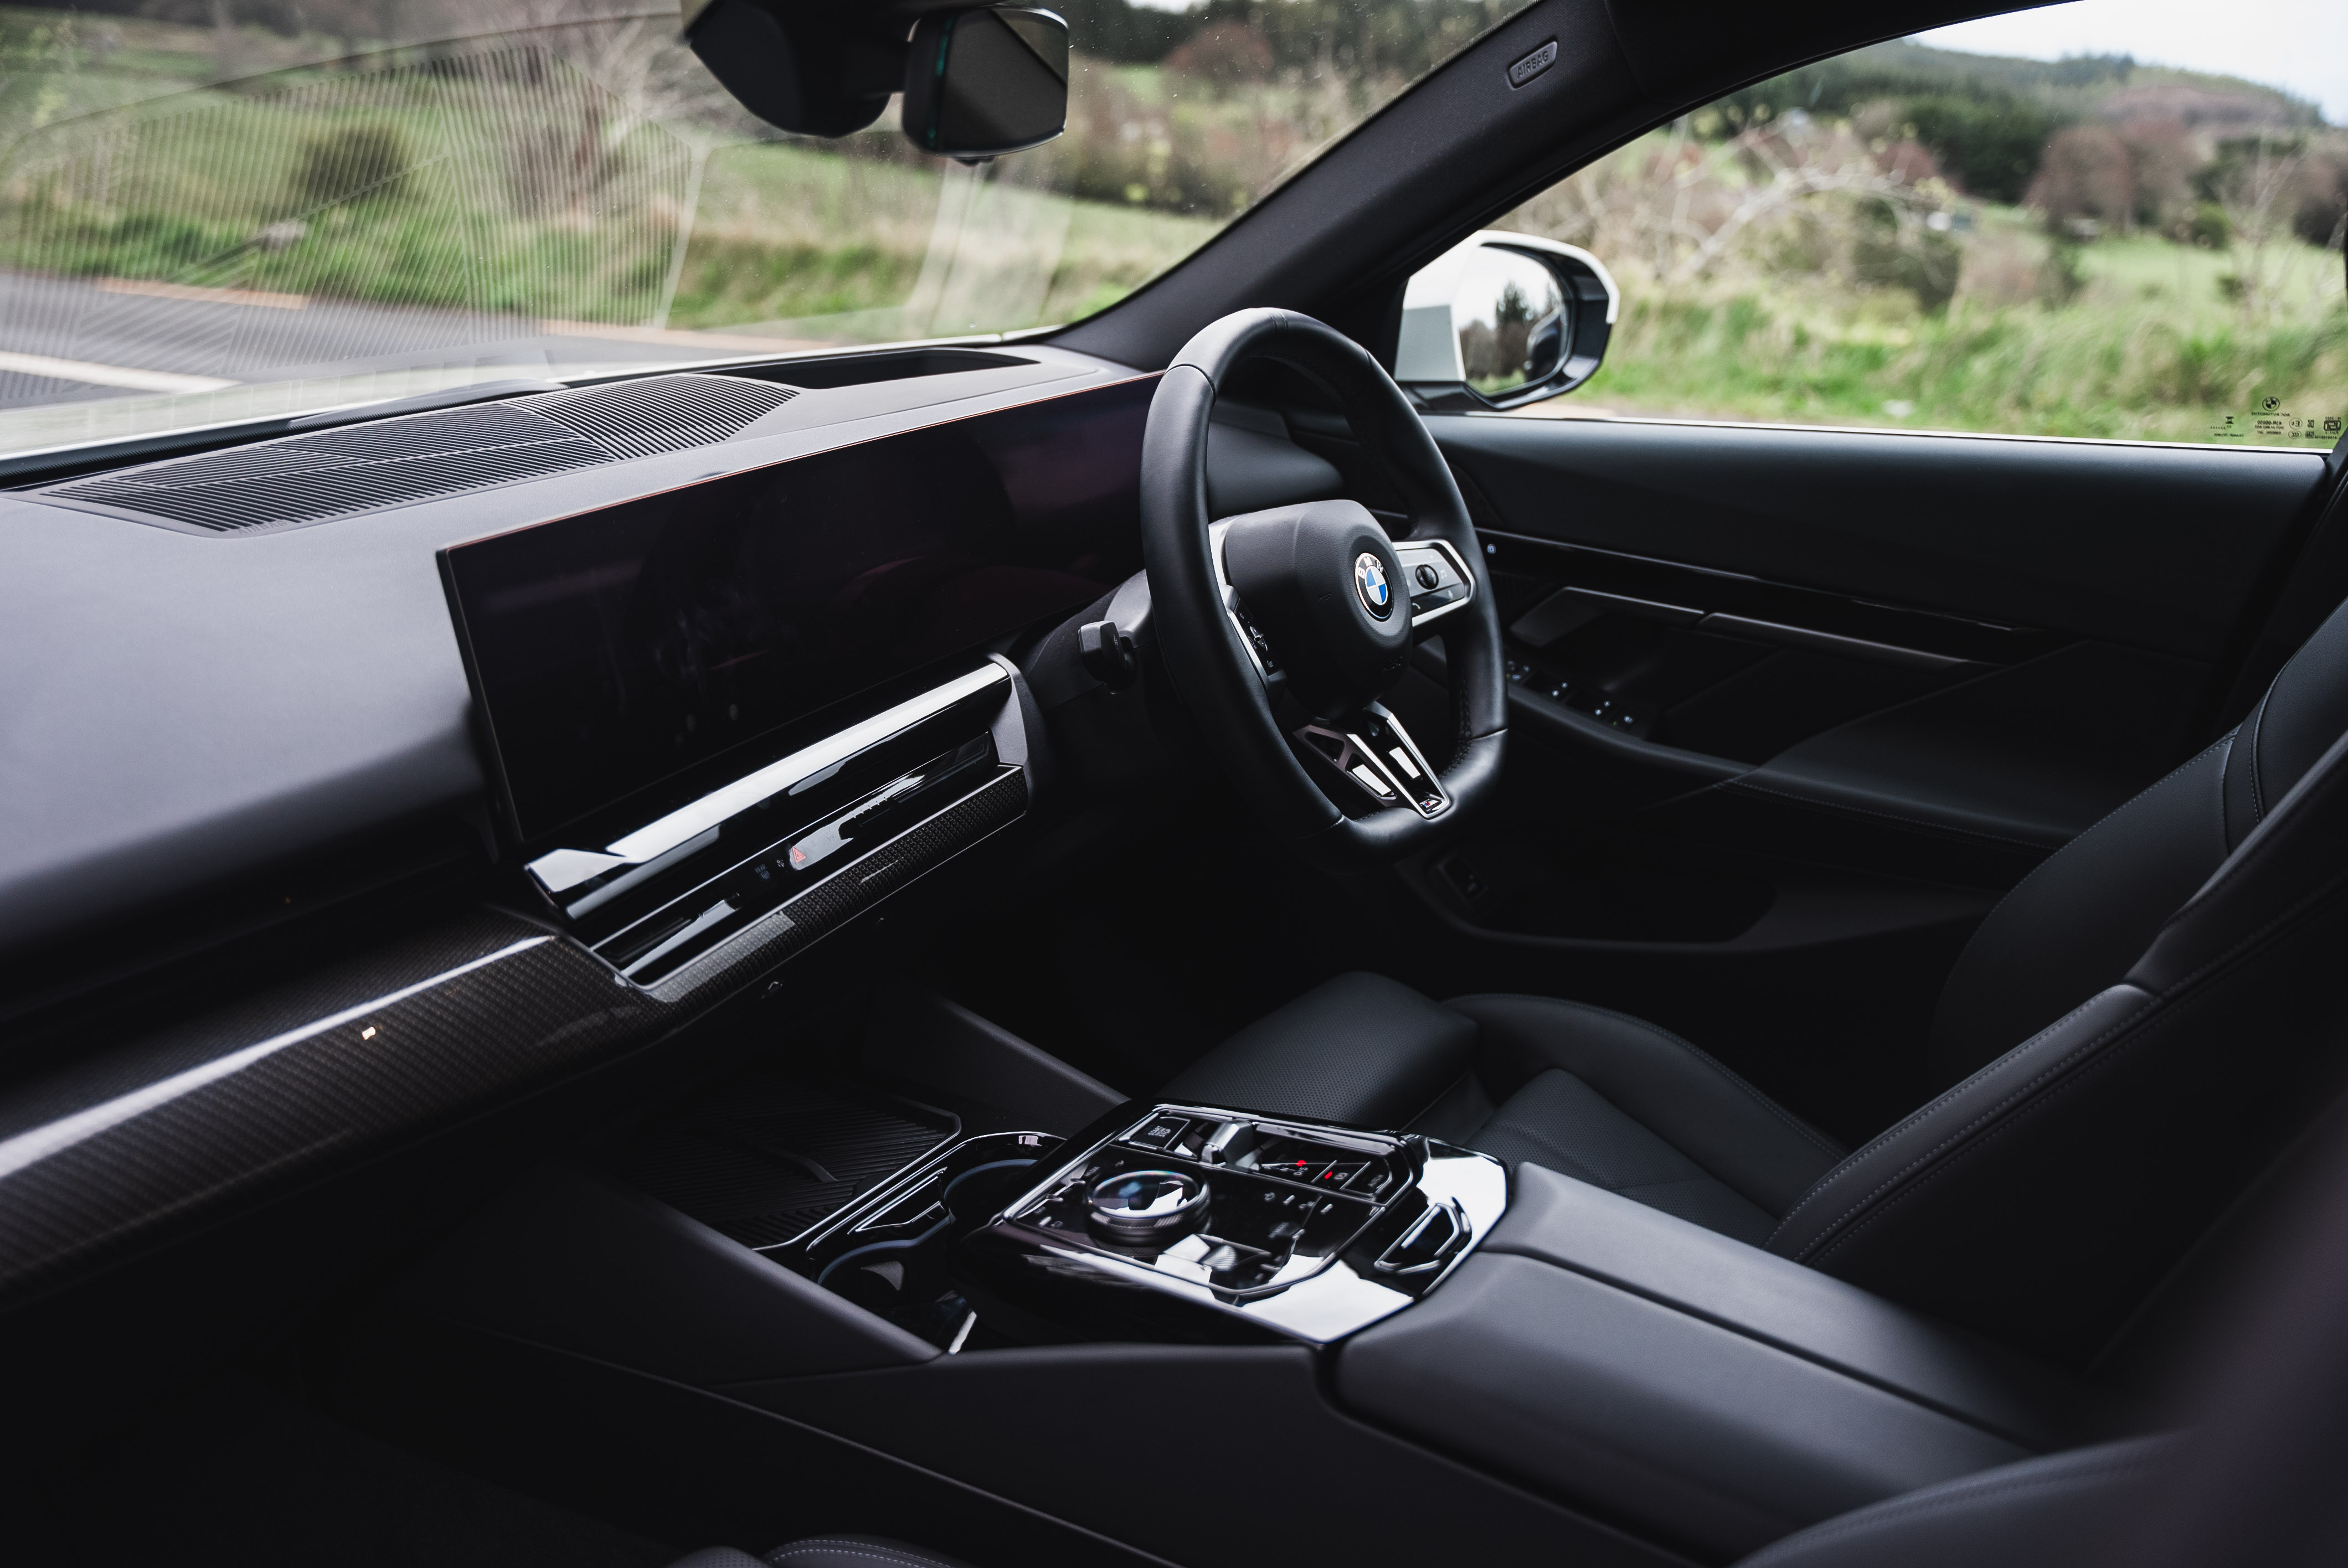 BMW 520i review Ireland 